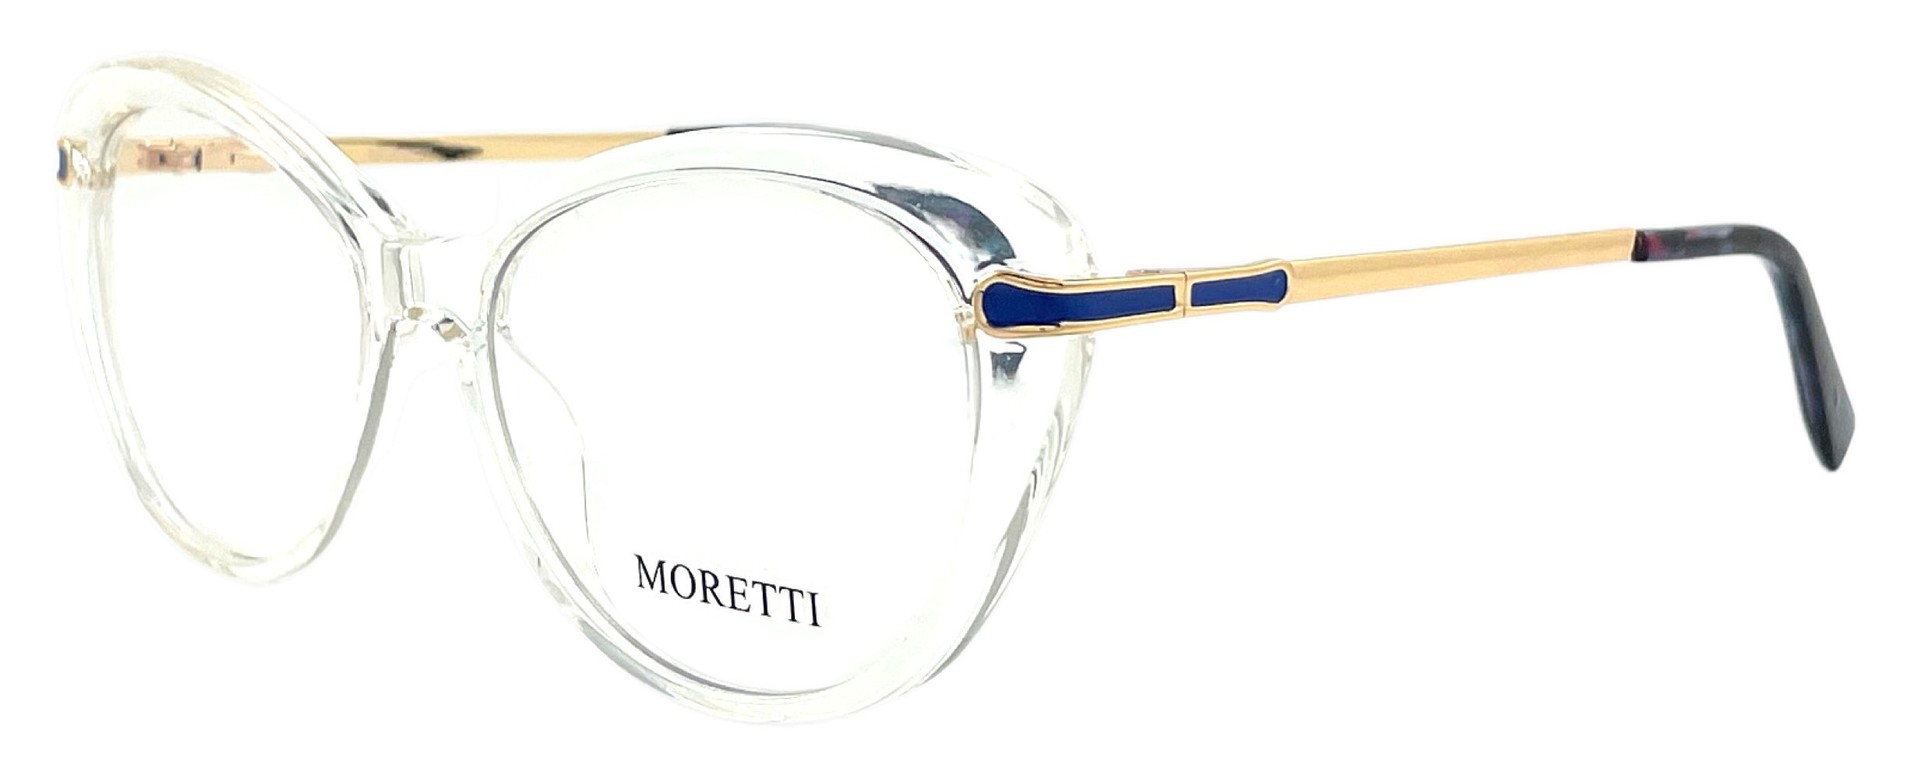 Moretti 2088 C2 2